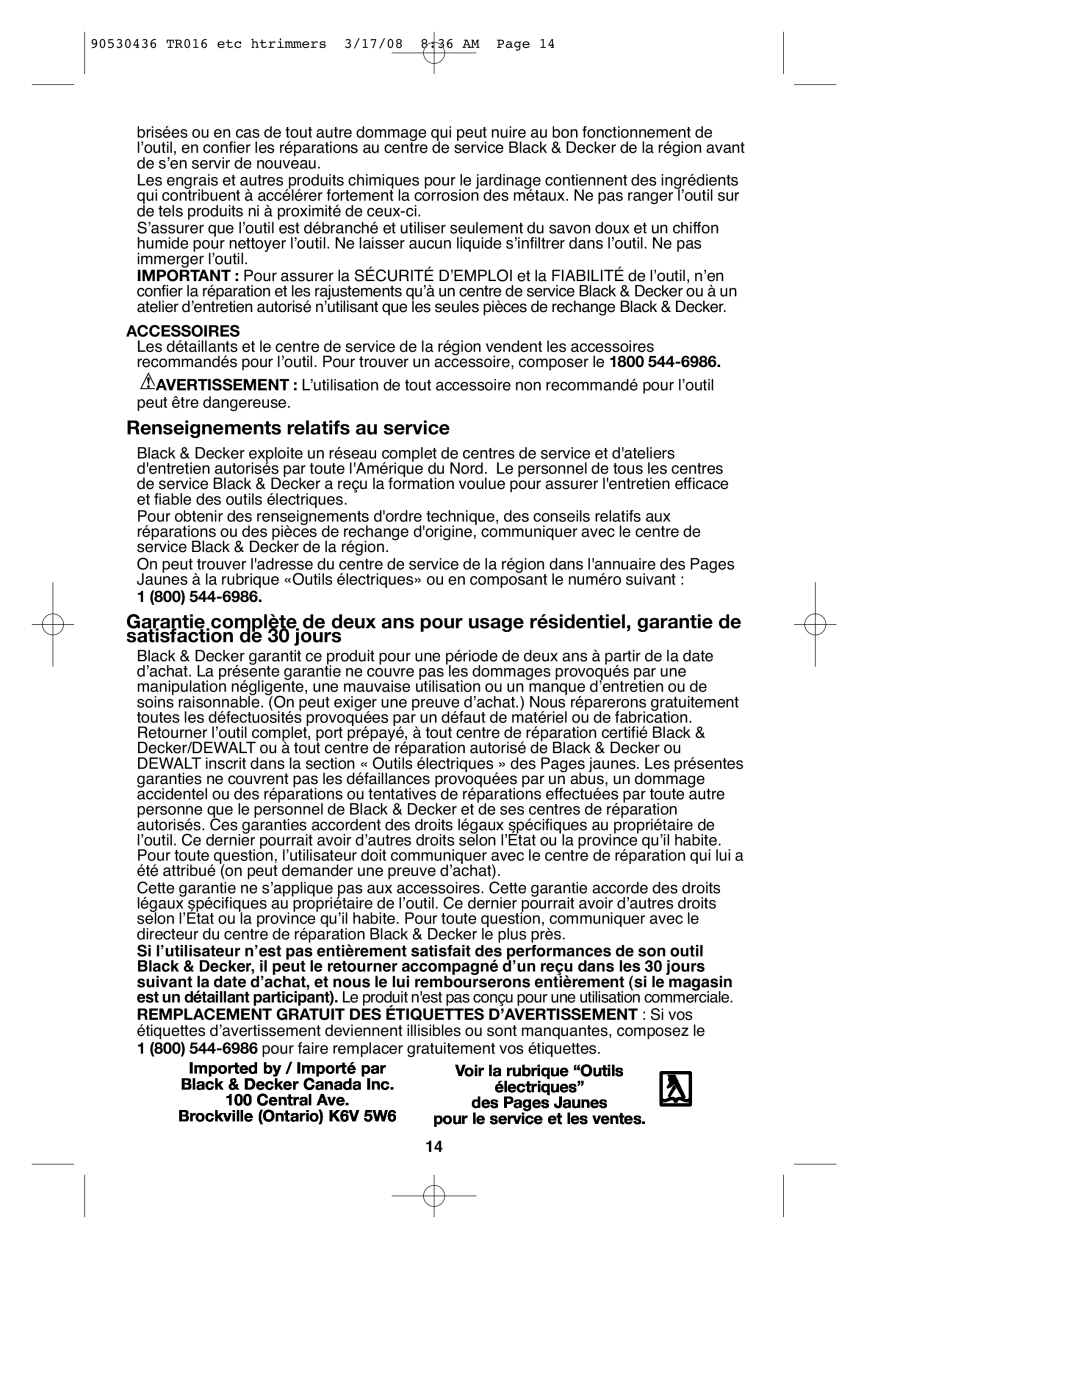 Black & Decker HT512, HT020, HT012, HT018, TR017 Renseignements relatifs au service, Accessoires, Brockville Ontario K6V 5W6 